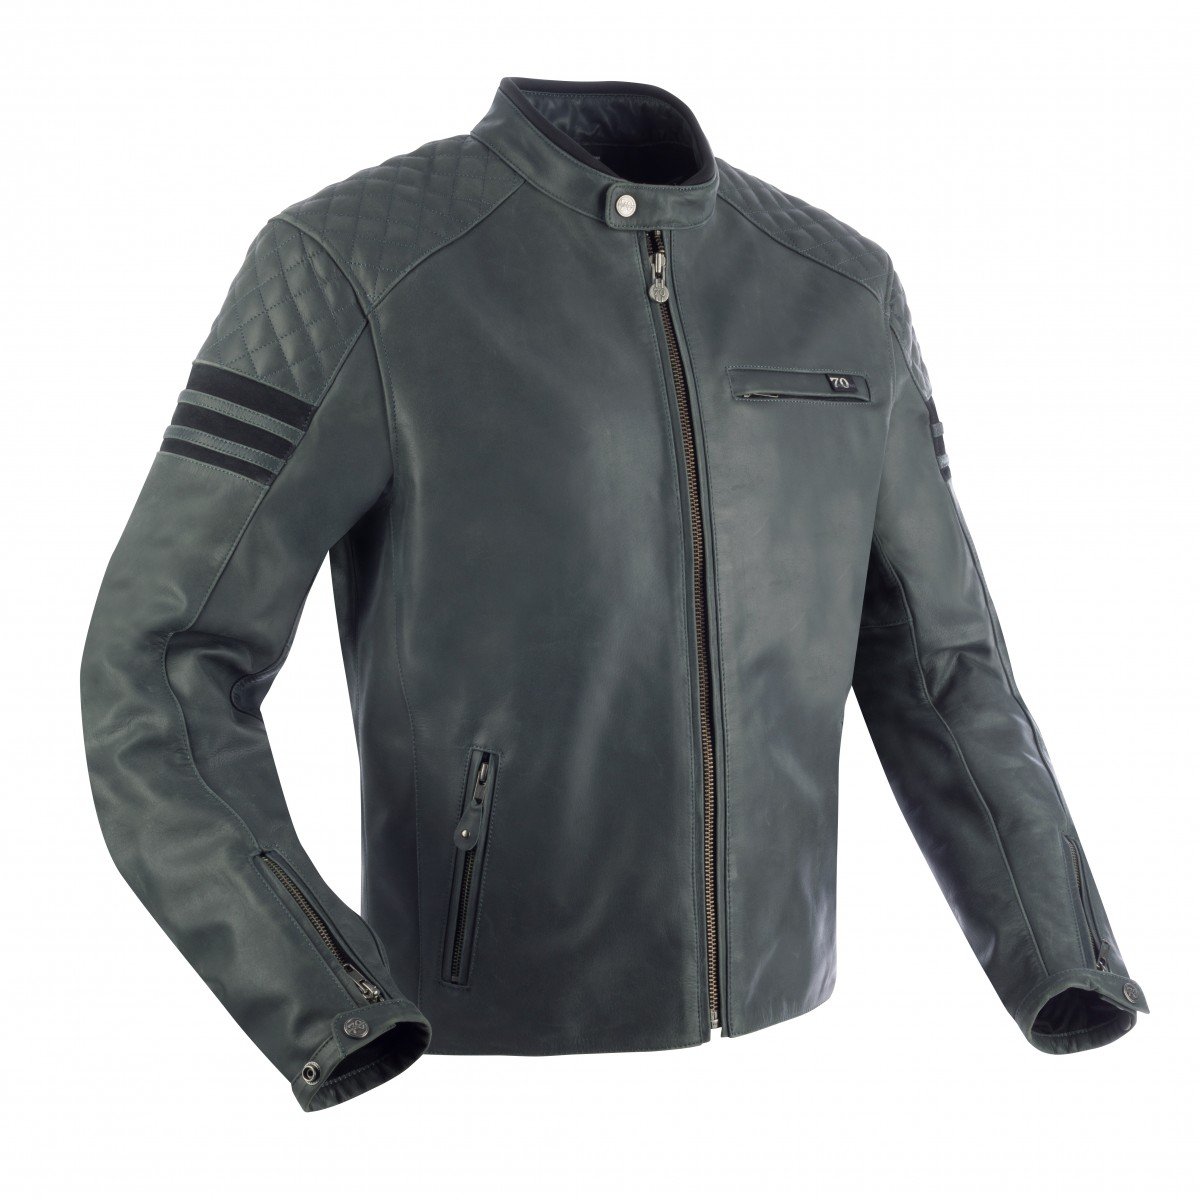 Image of Segura Track Jacket Gray Black Size 2XL ID 3660815171929